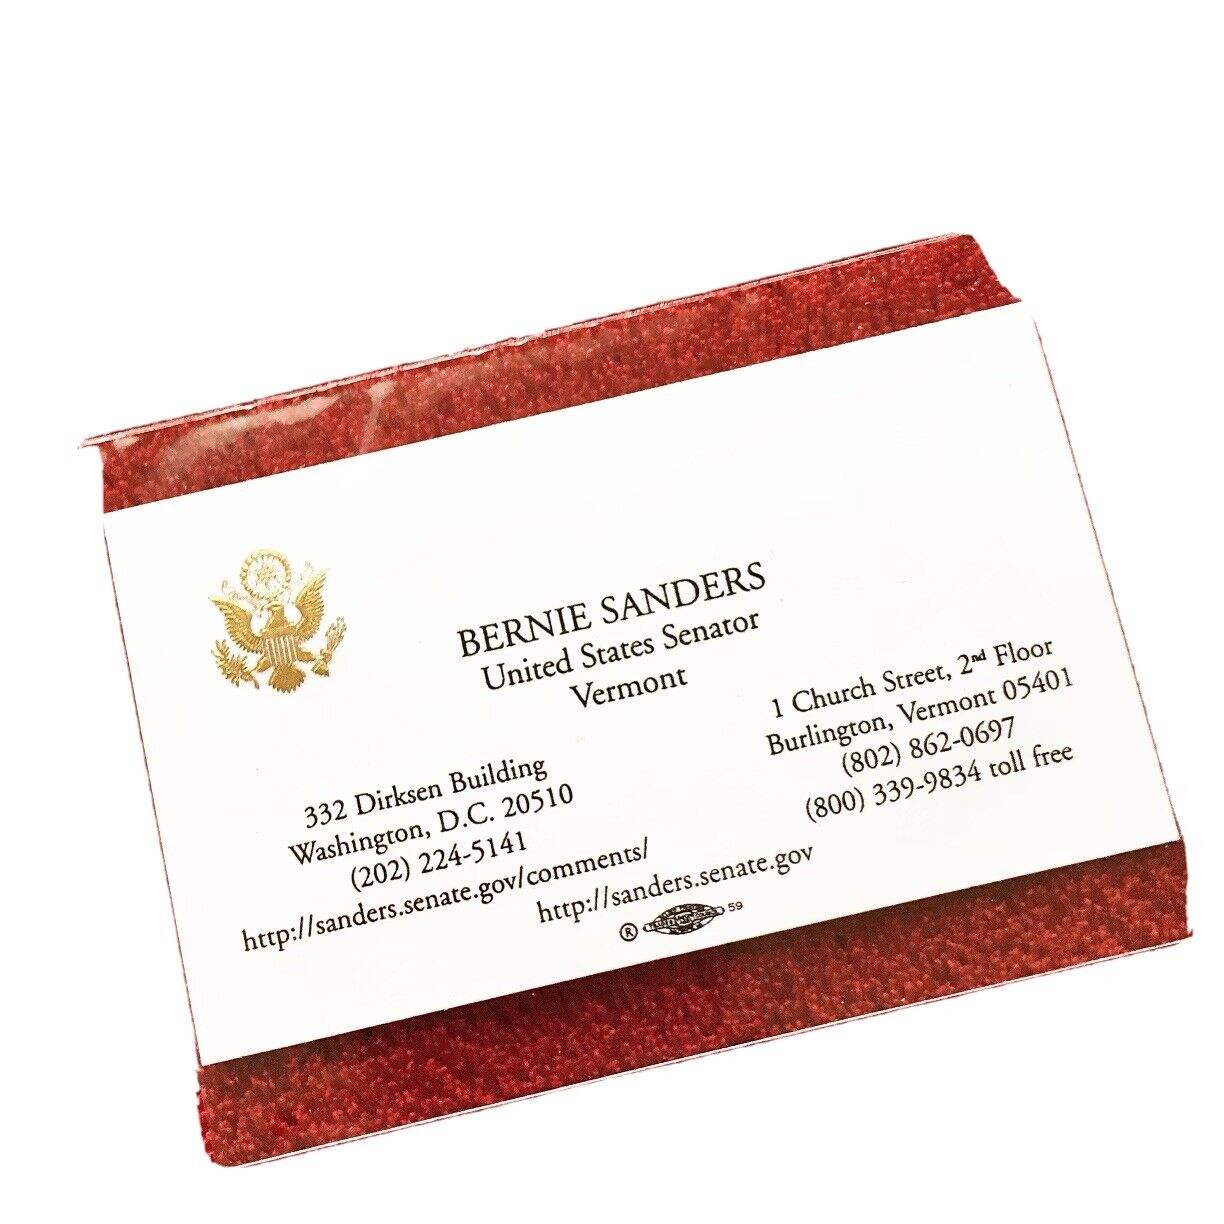 Bernie Sanders Official US Senator Business Card